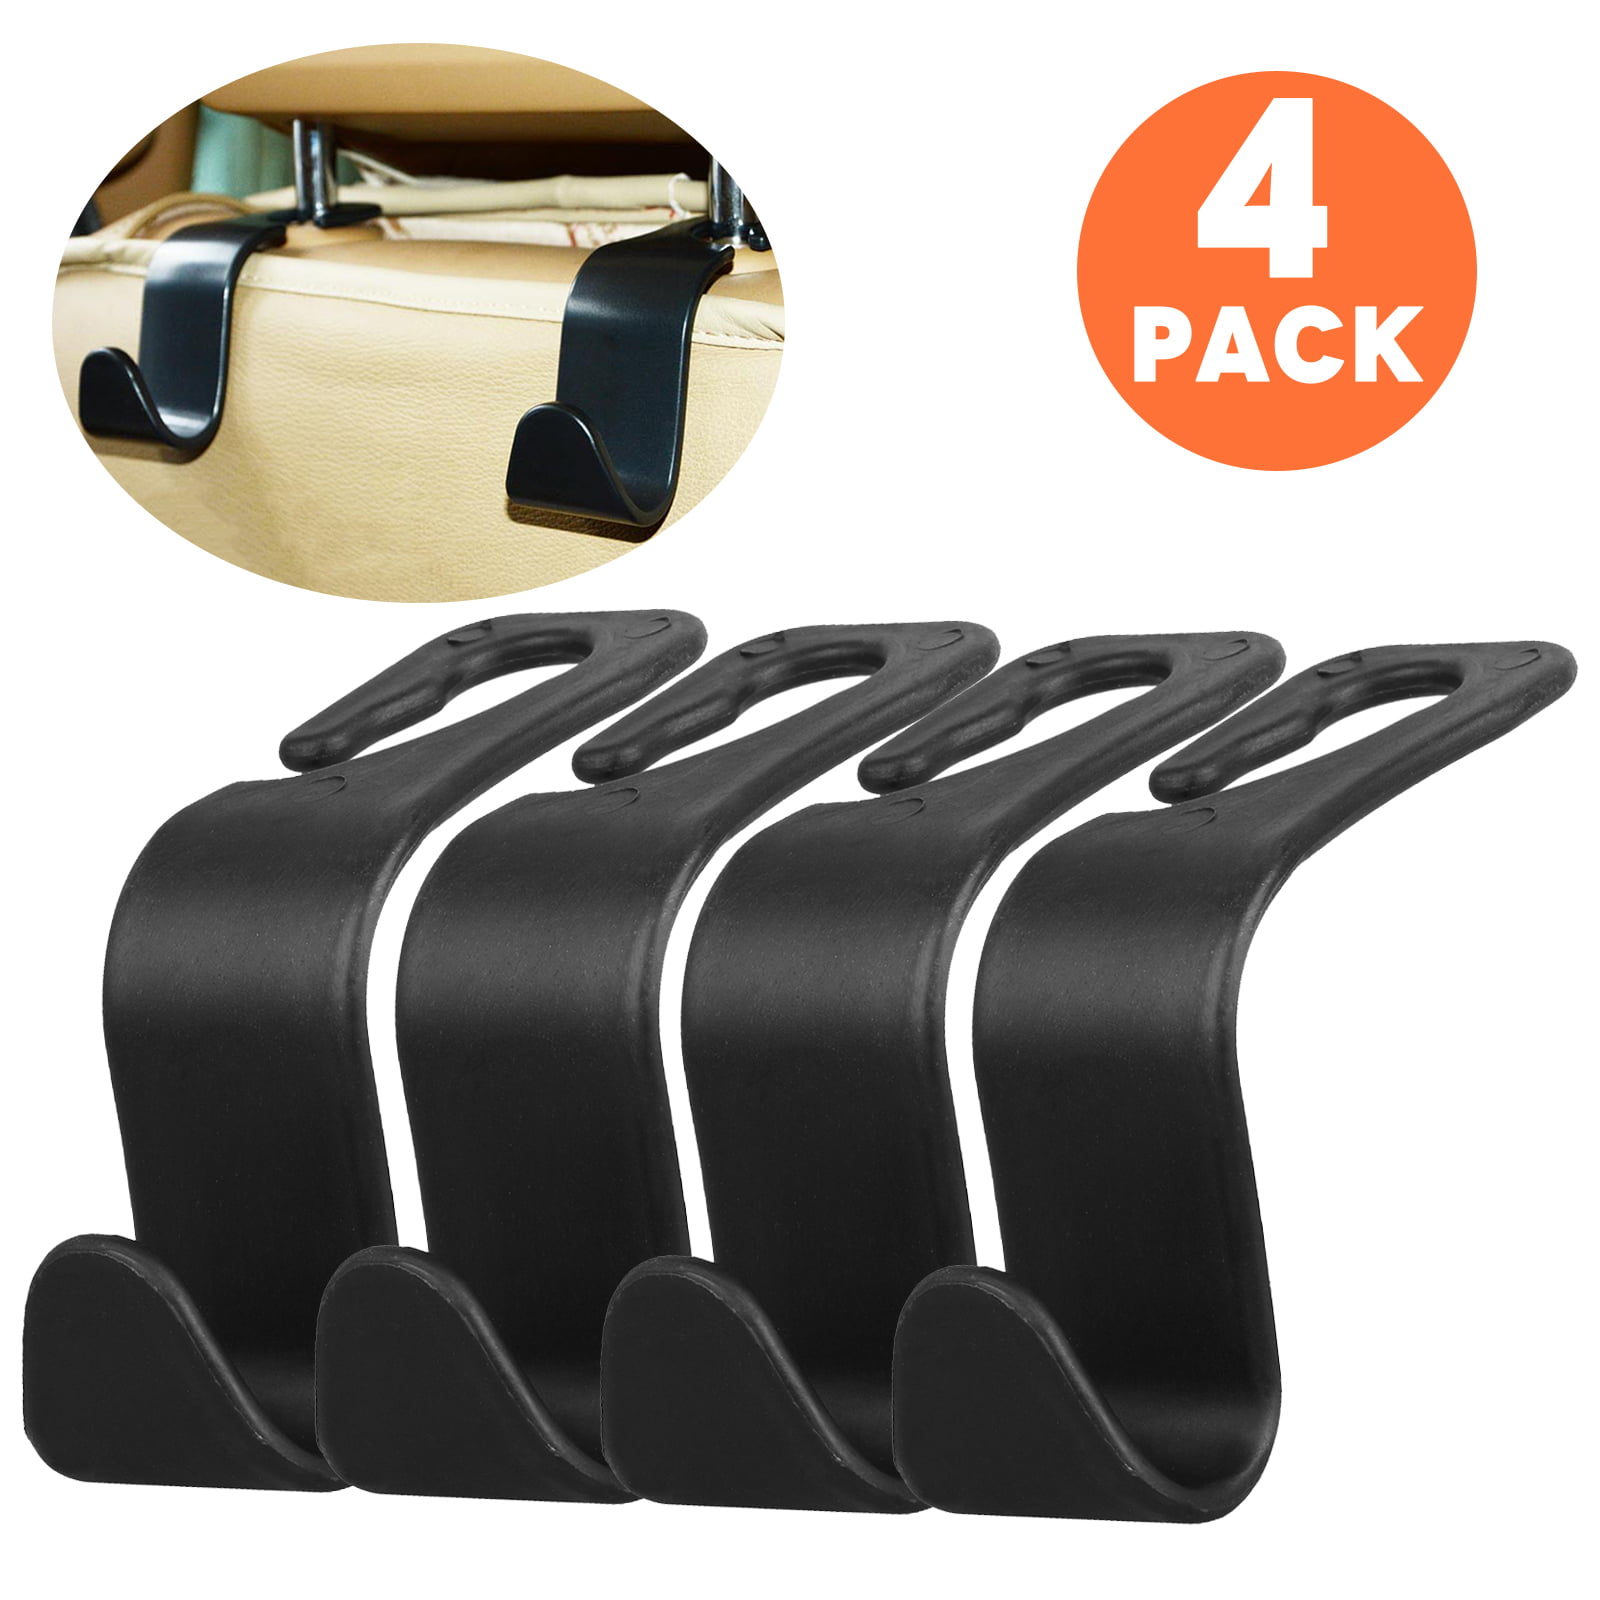 2 Pack Car Seat Headrest Hook Bling Rhinestone Hanger Storage Organizer Hanger Holder Hooks for Handbag Purse Coat fit Universal Vehicle Car Black S Type